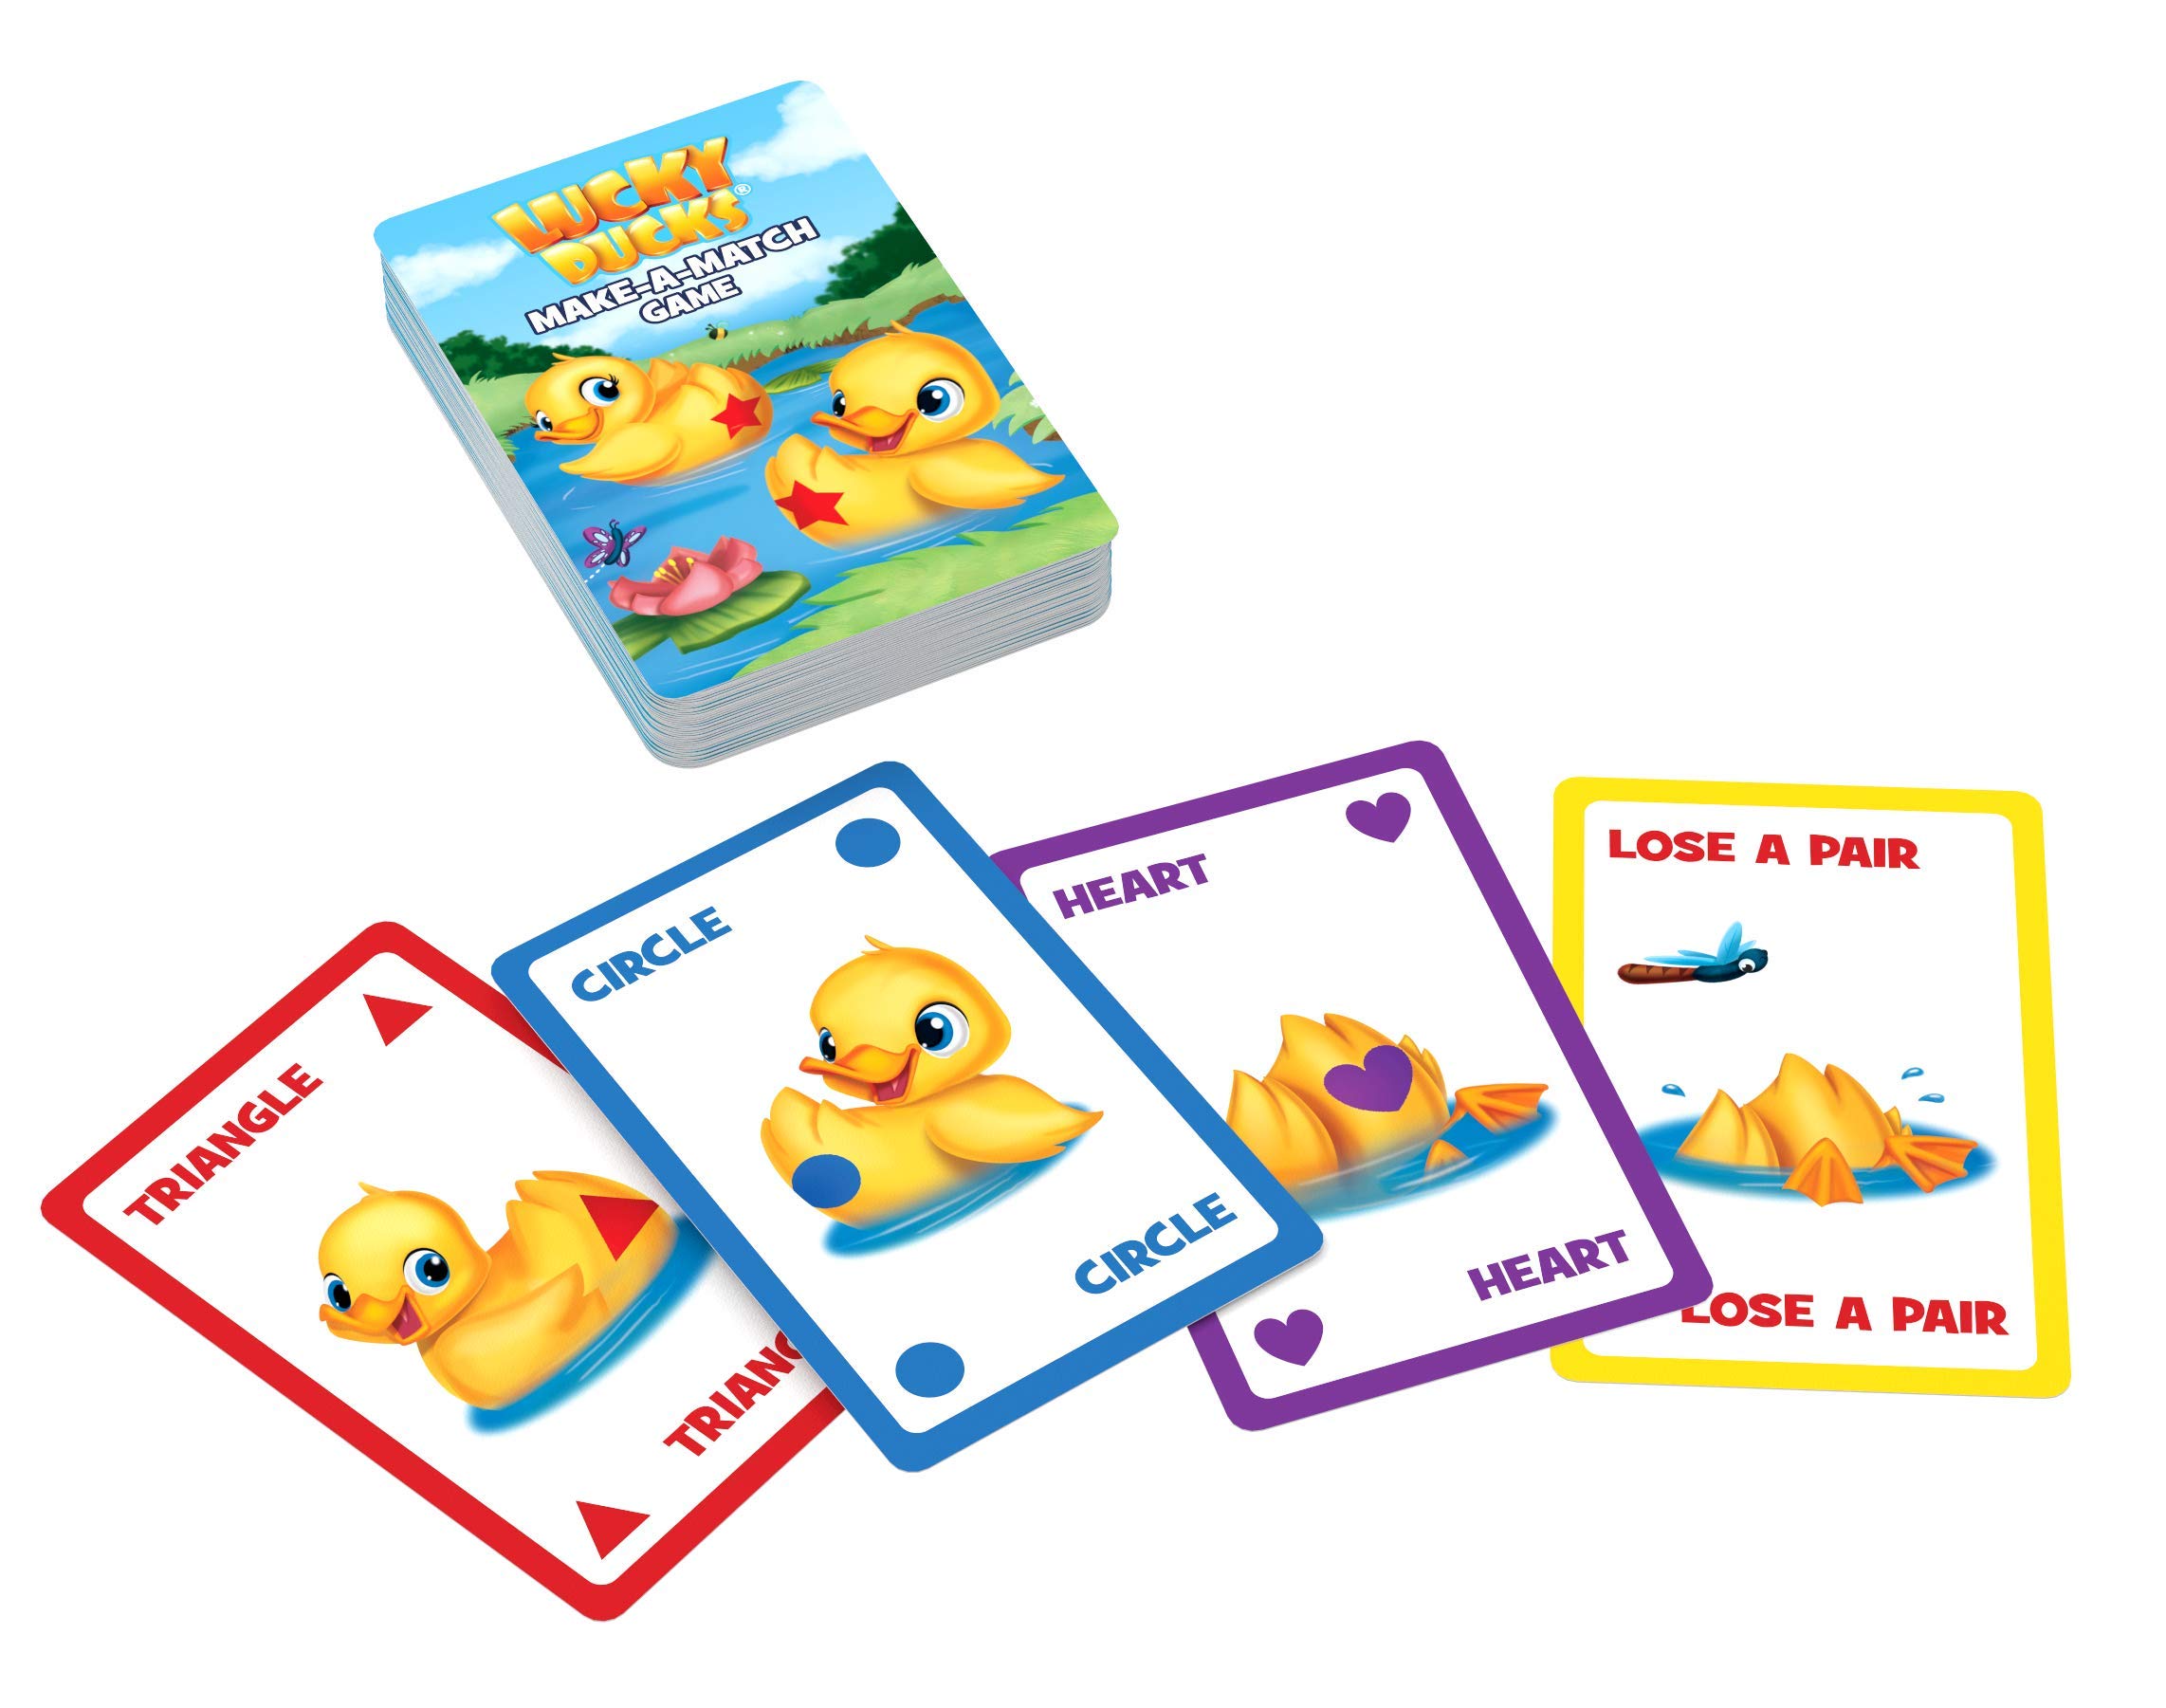 Amazon Exclusive Bonus Edition Let's Go Fishin' - Includes Lucky Ducks Make-A-Match Game!